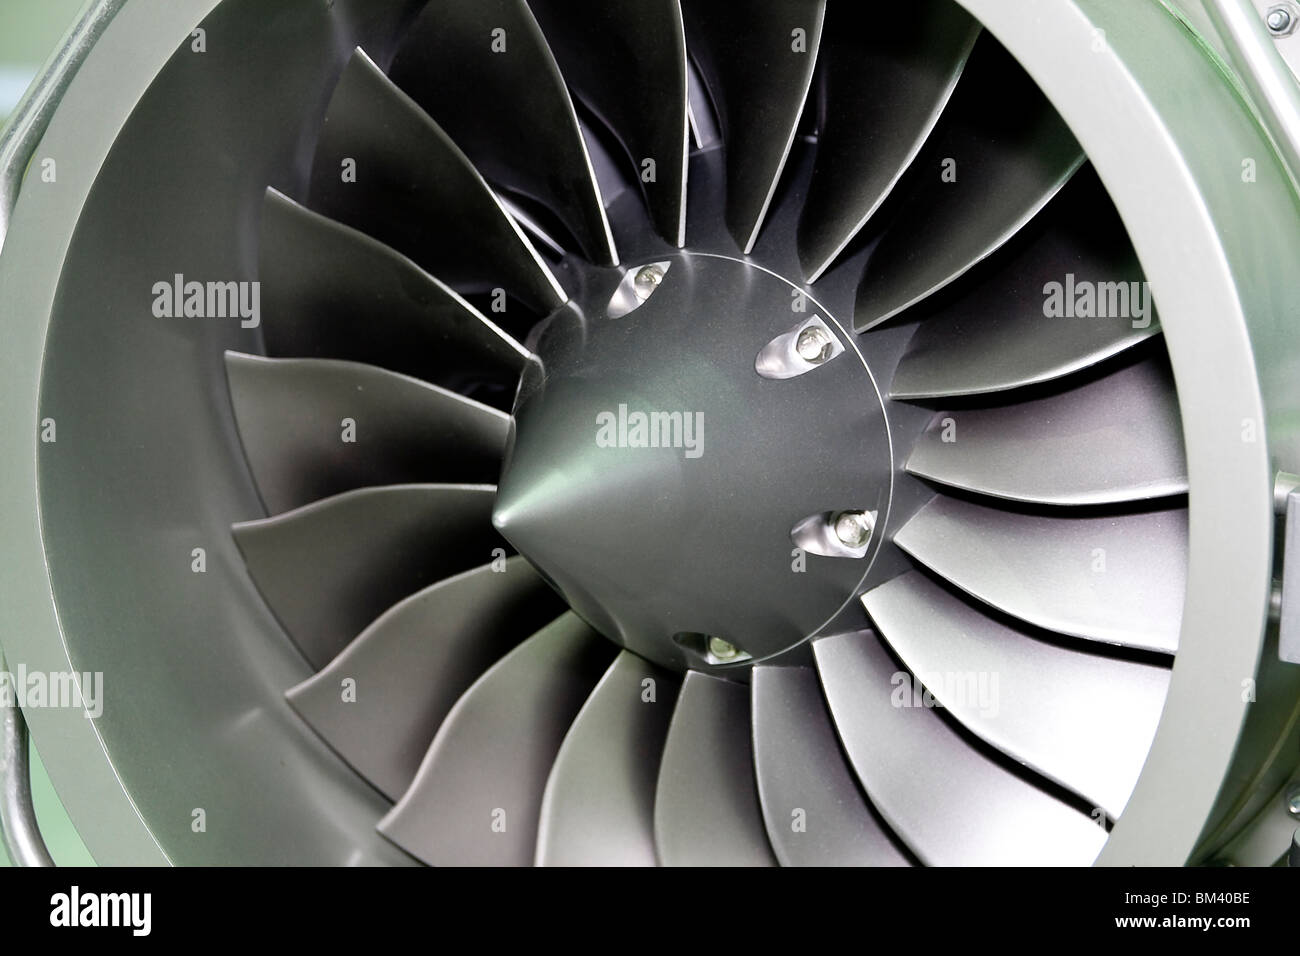 Large airplane turbofan engine blades Stock Photo